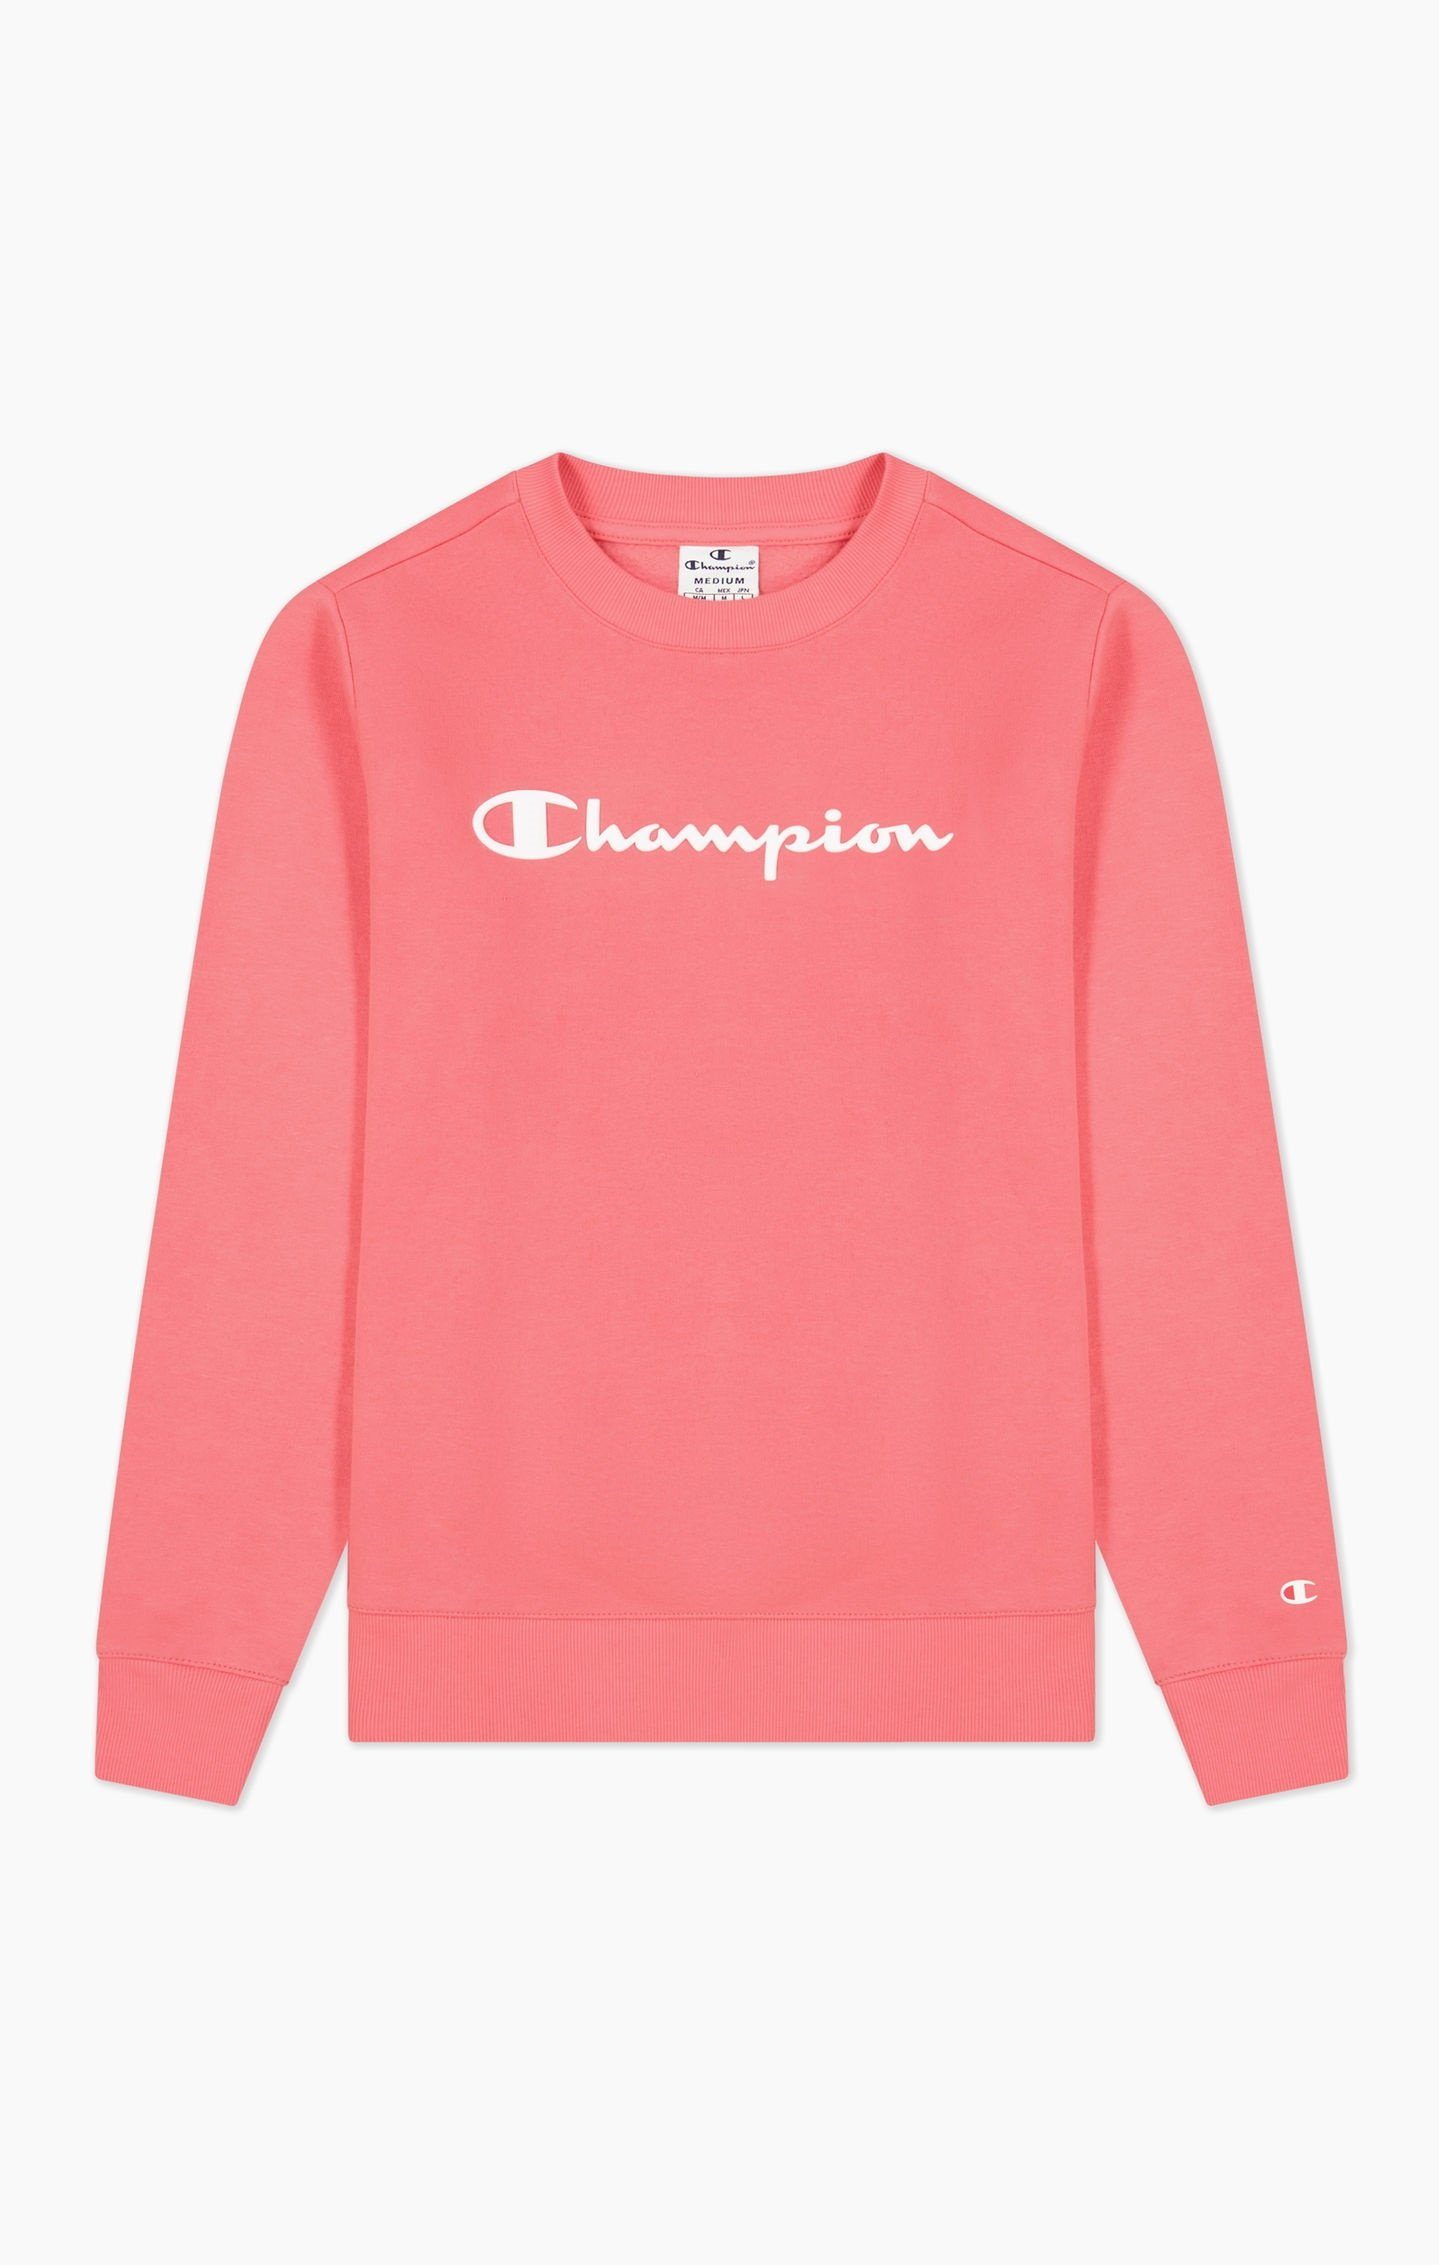 Sweatshirt Baumwollfleece rosa Champion mit Pullover Sweatshirt aus